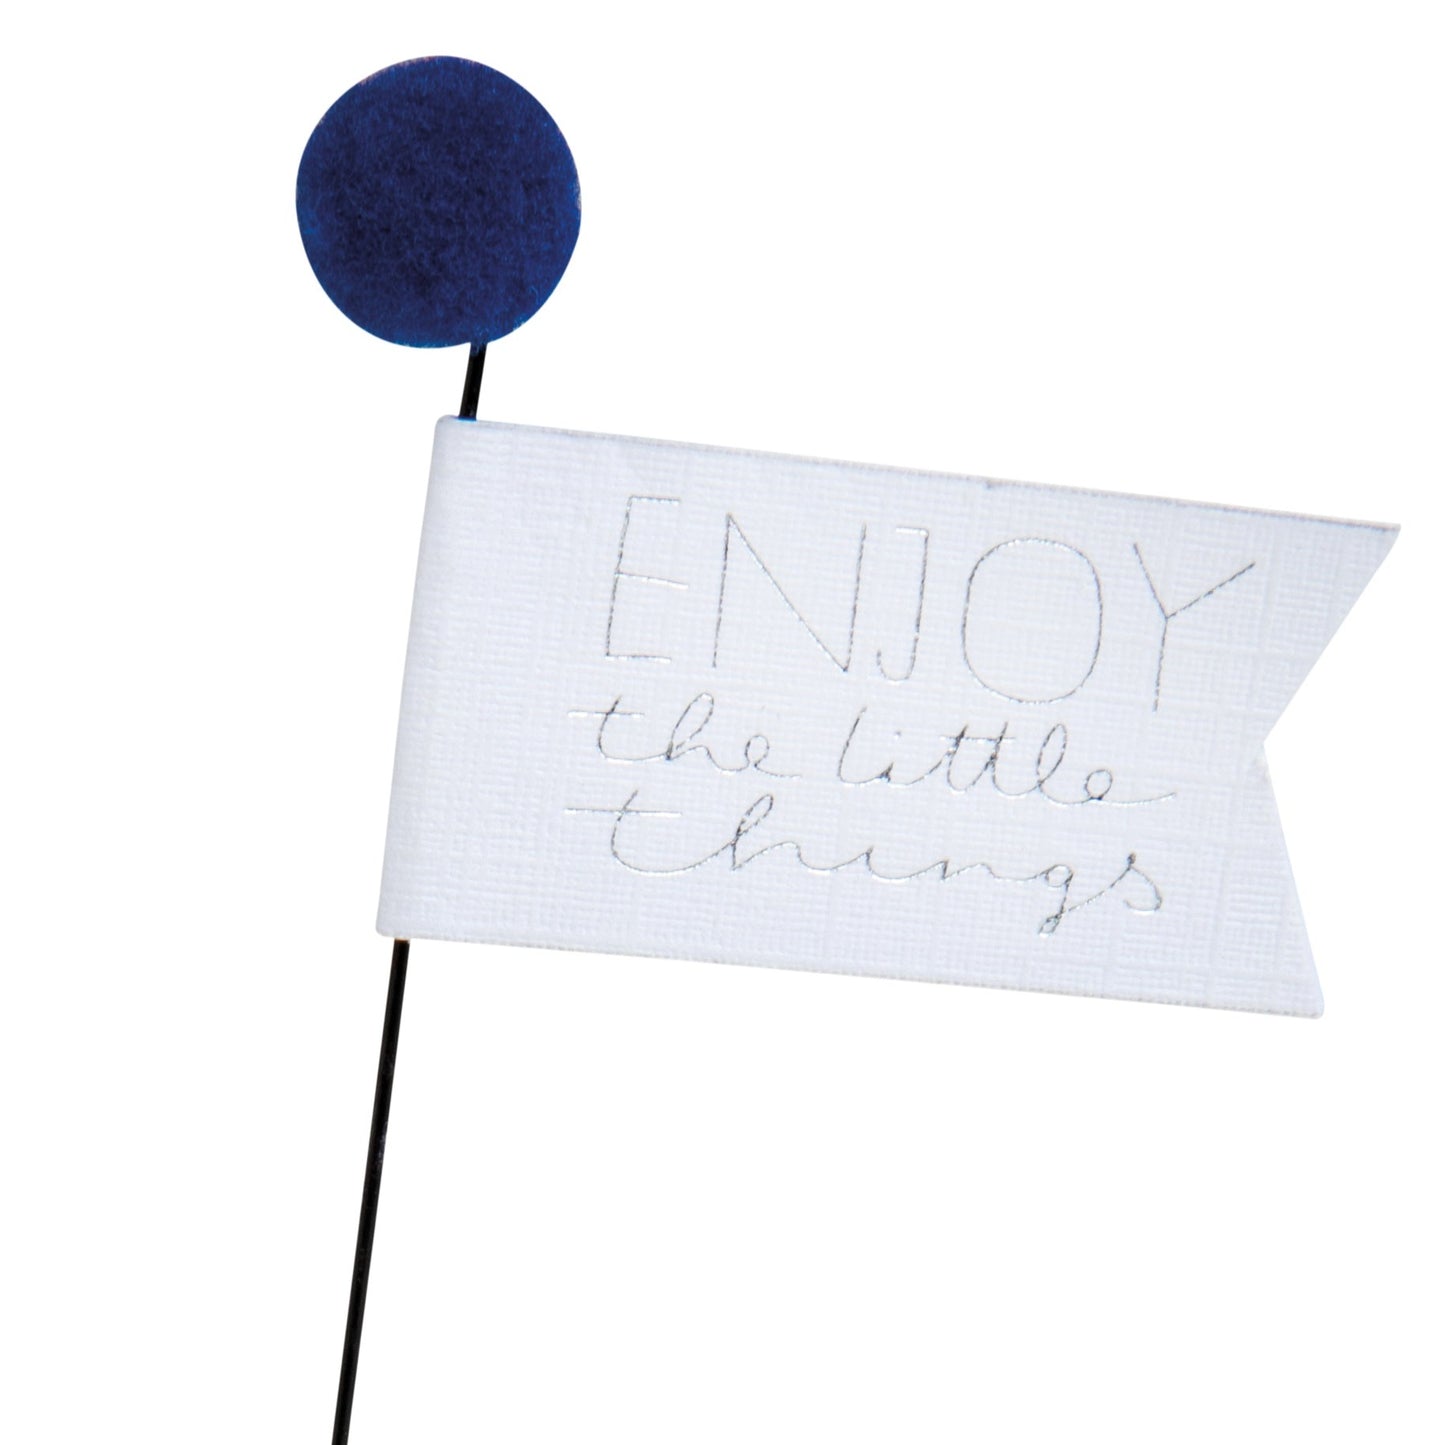 Huisjespost "Enjoy the little things" - Räder